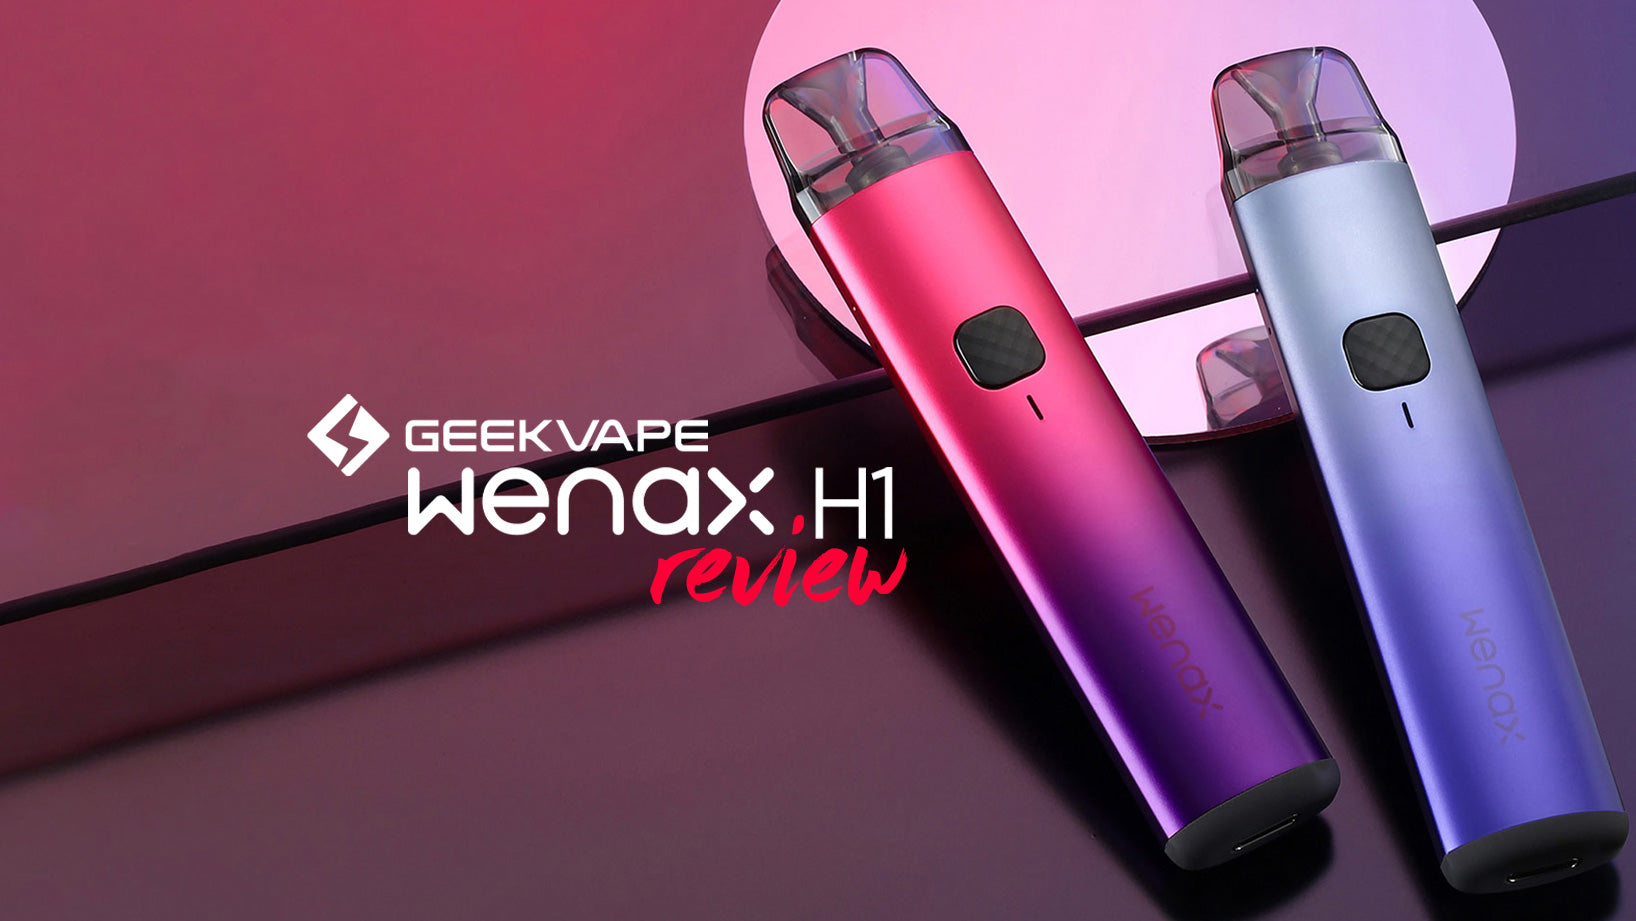 Geek vape Wenax H1 device